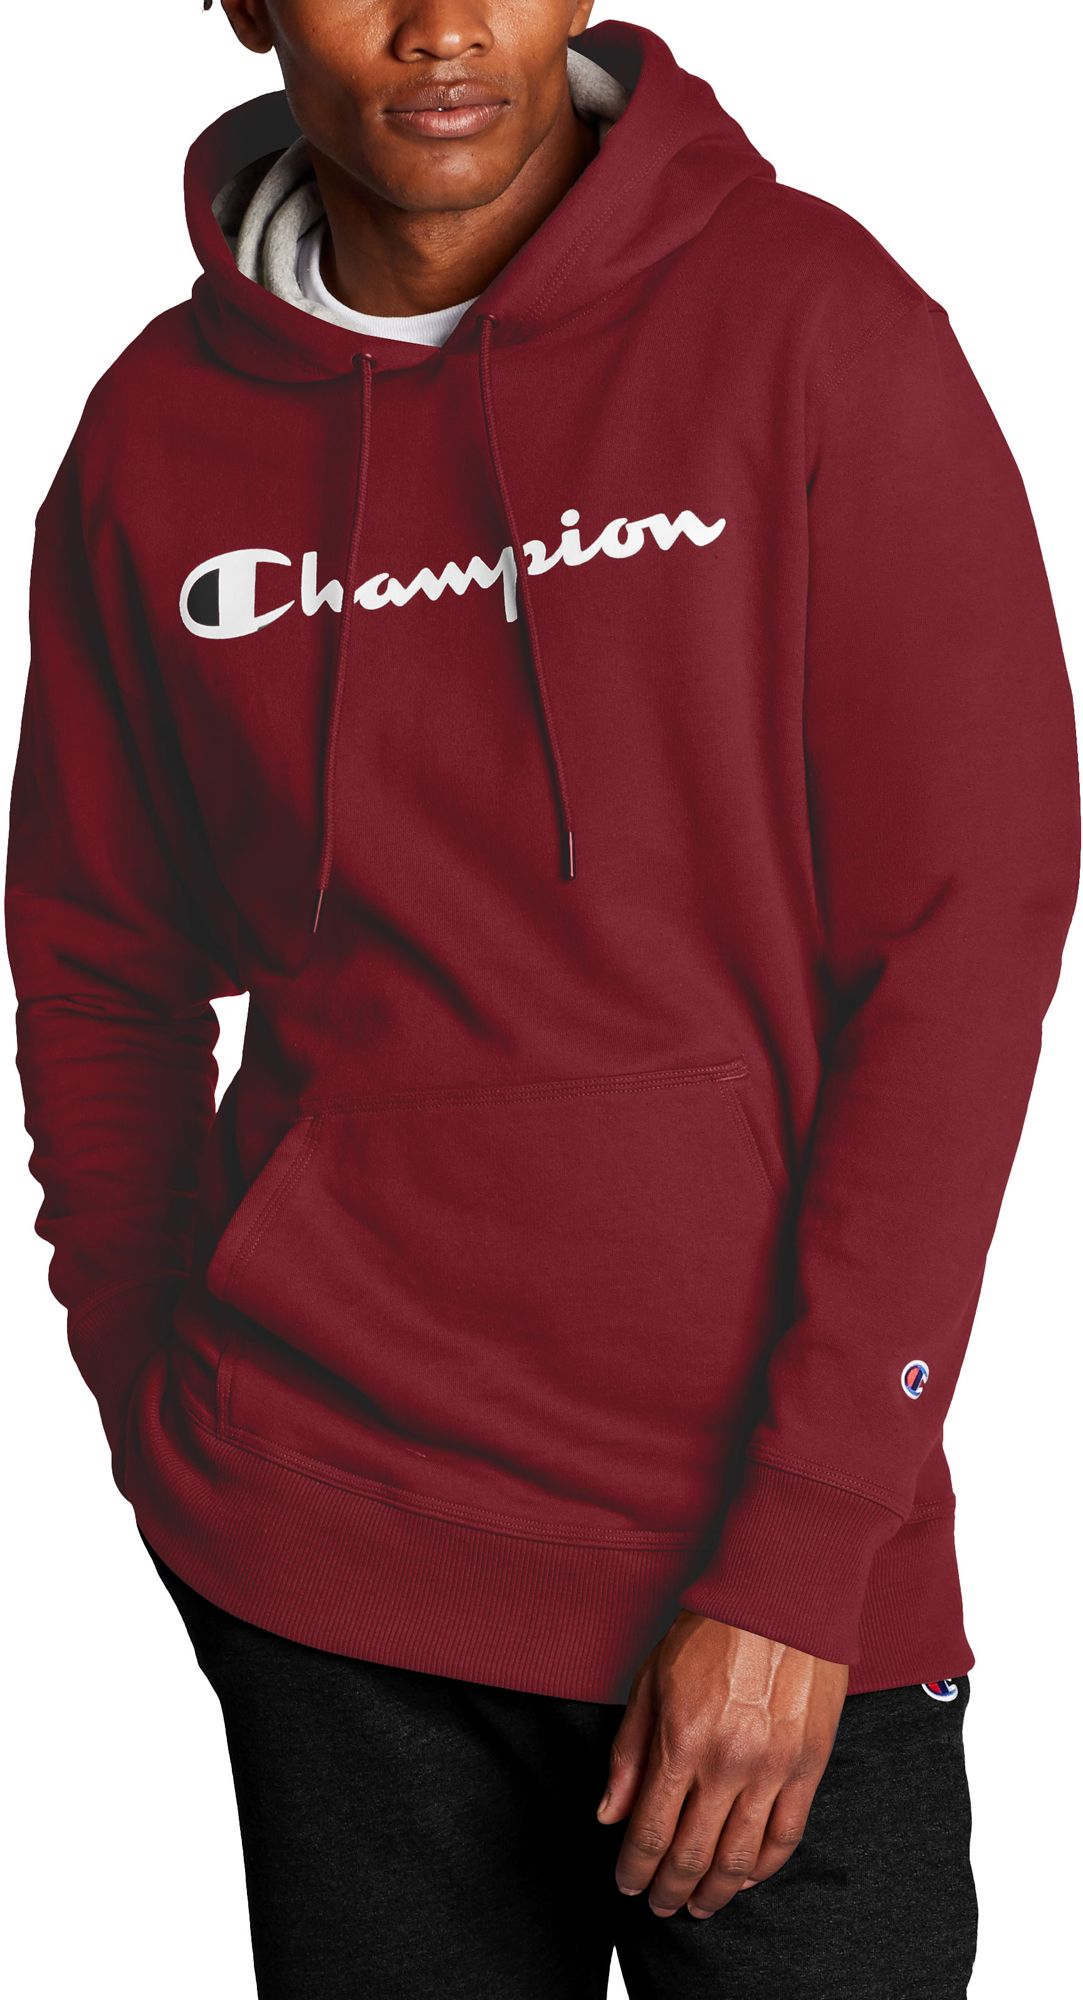 dicks champion hoodie